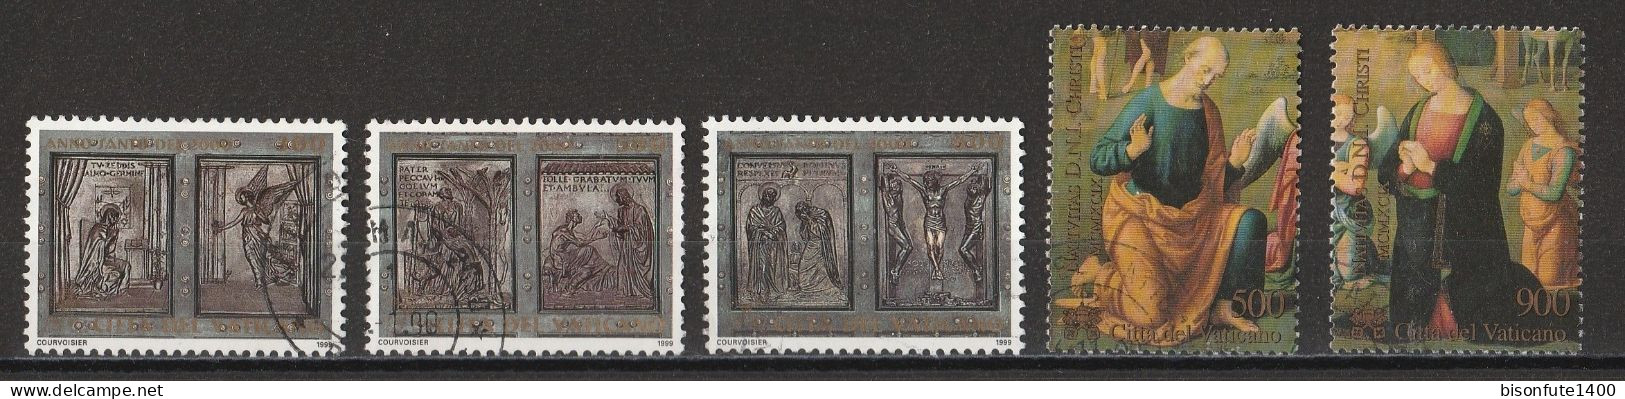 Vatican 1999 : Timbres Yvert & Tellier N° 1162 - 1164 - 1166 - 1177 - 1178 - 1179 Et 1180 Oblitérés - Usados